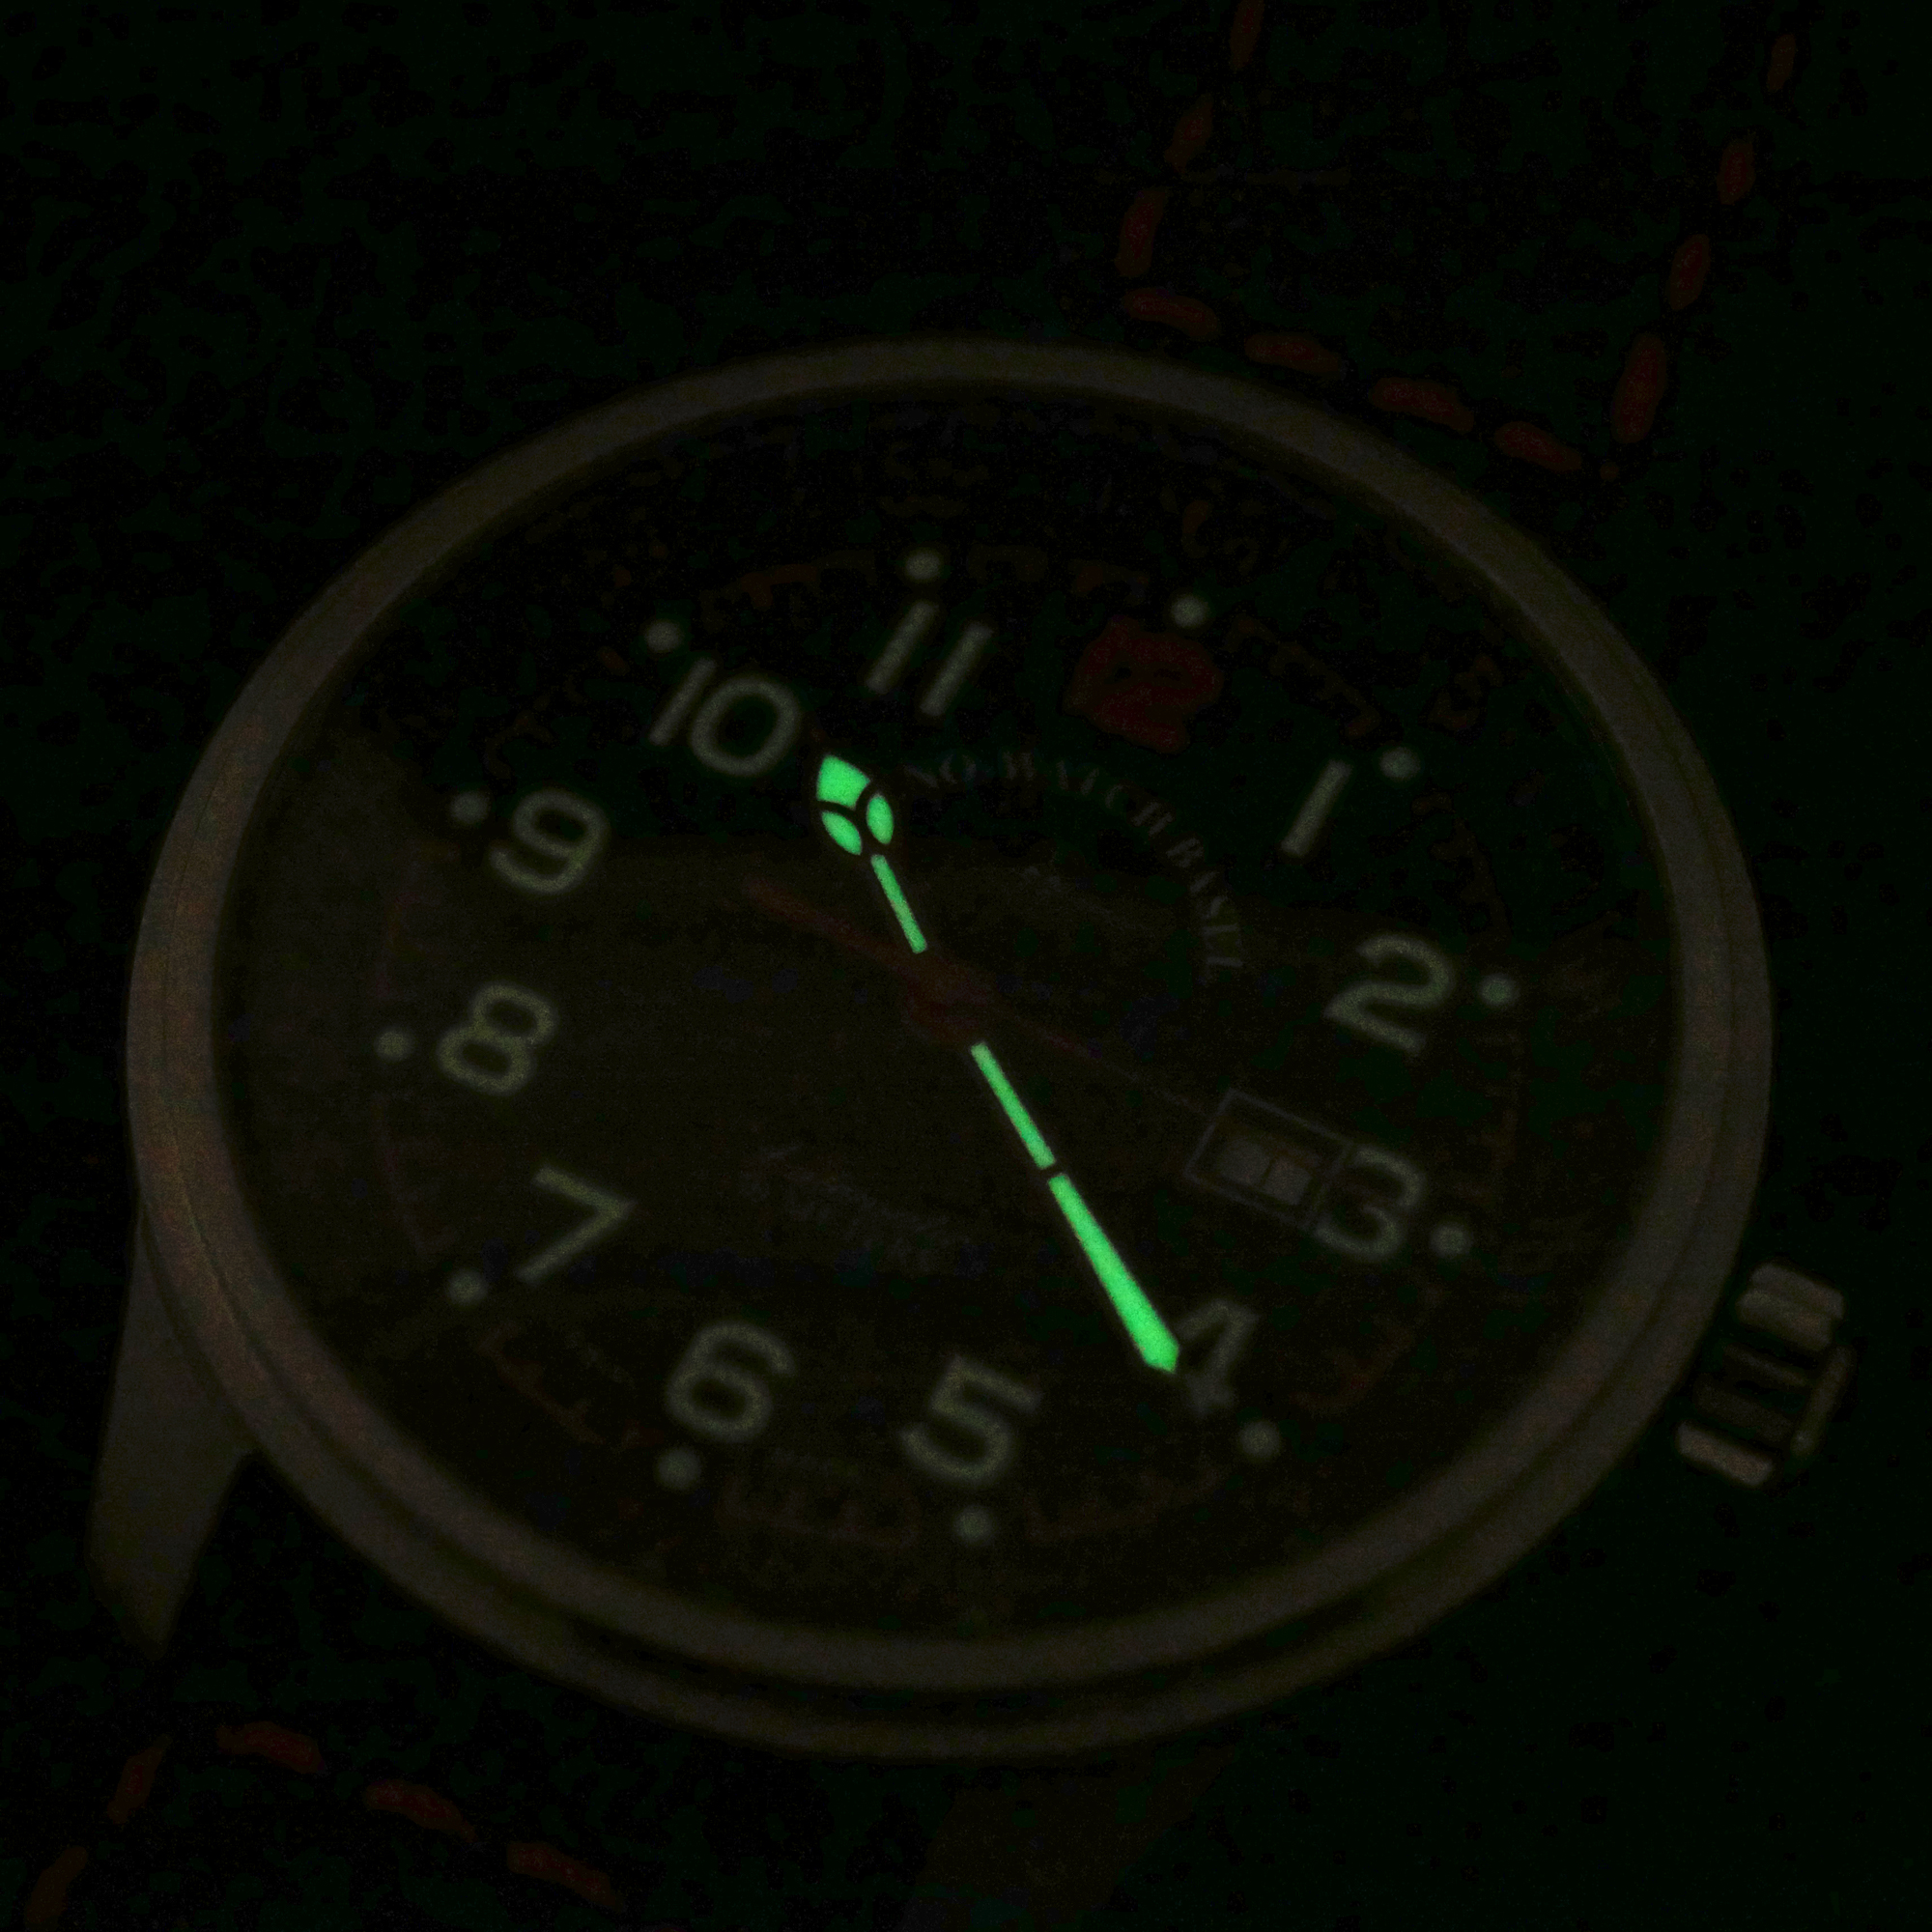 Zeno-Watch Basel OS Pilot Minute bezel ring Automatic Swiss Men's Watch 47.5mm 3ATM 8554B-a1-7